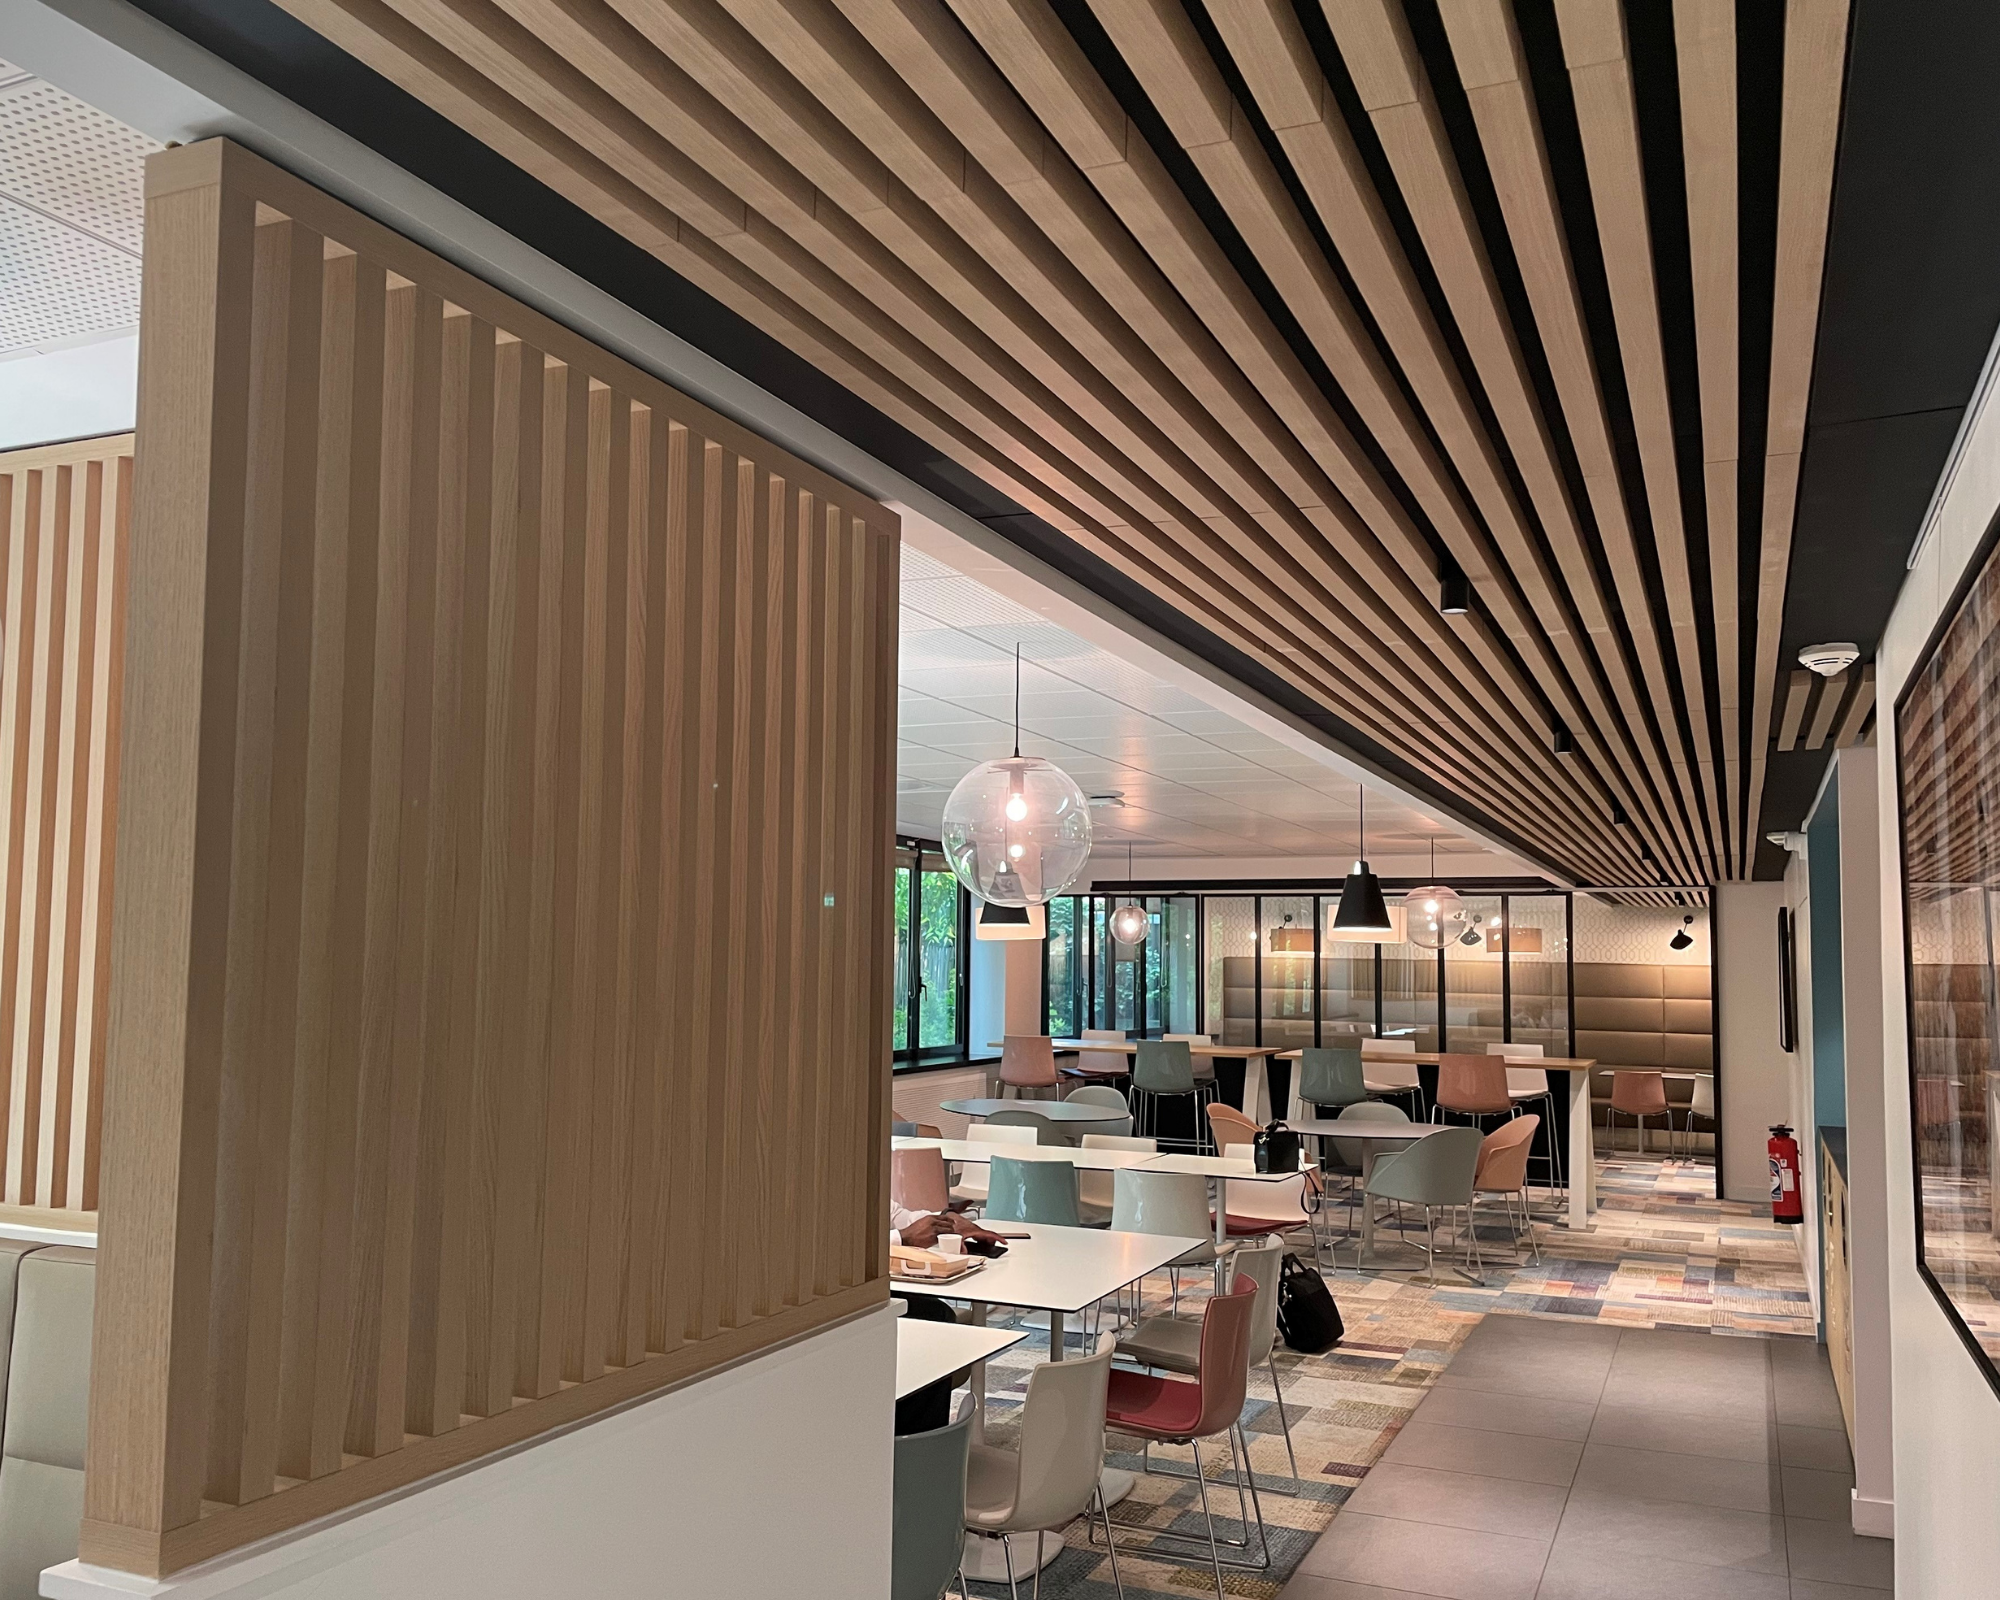 dining space - slats - ceiling slats 